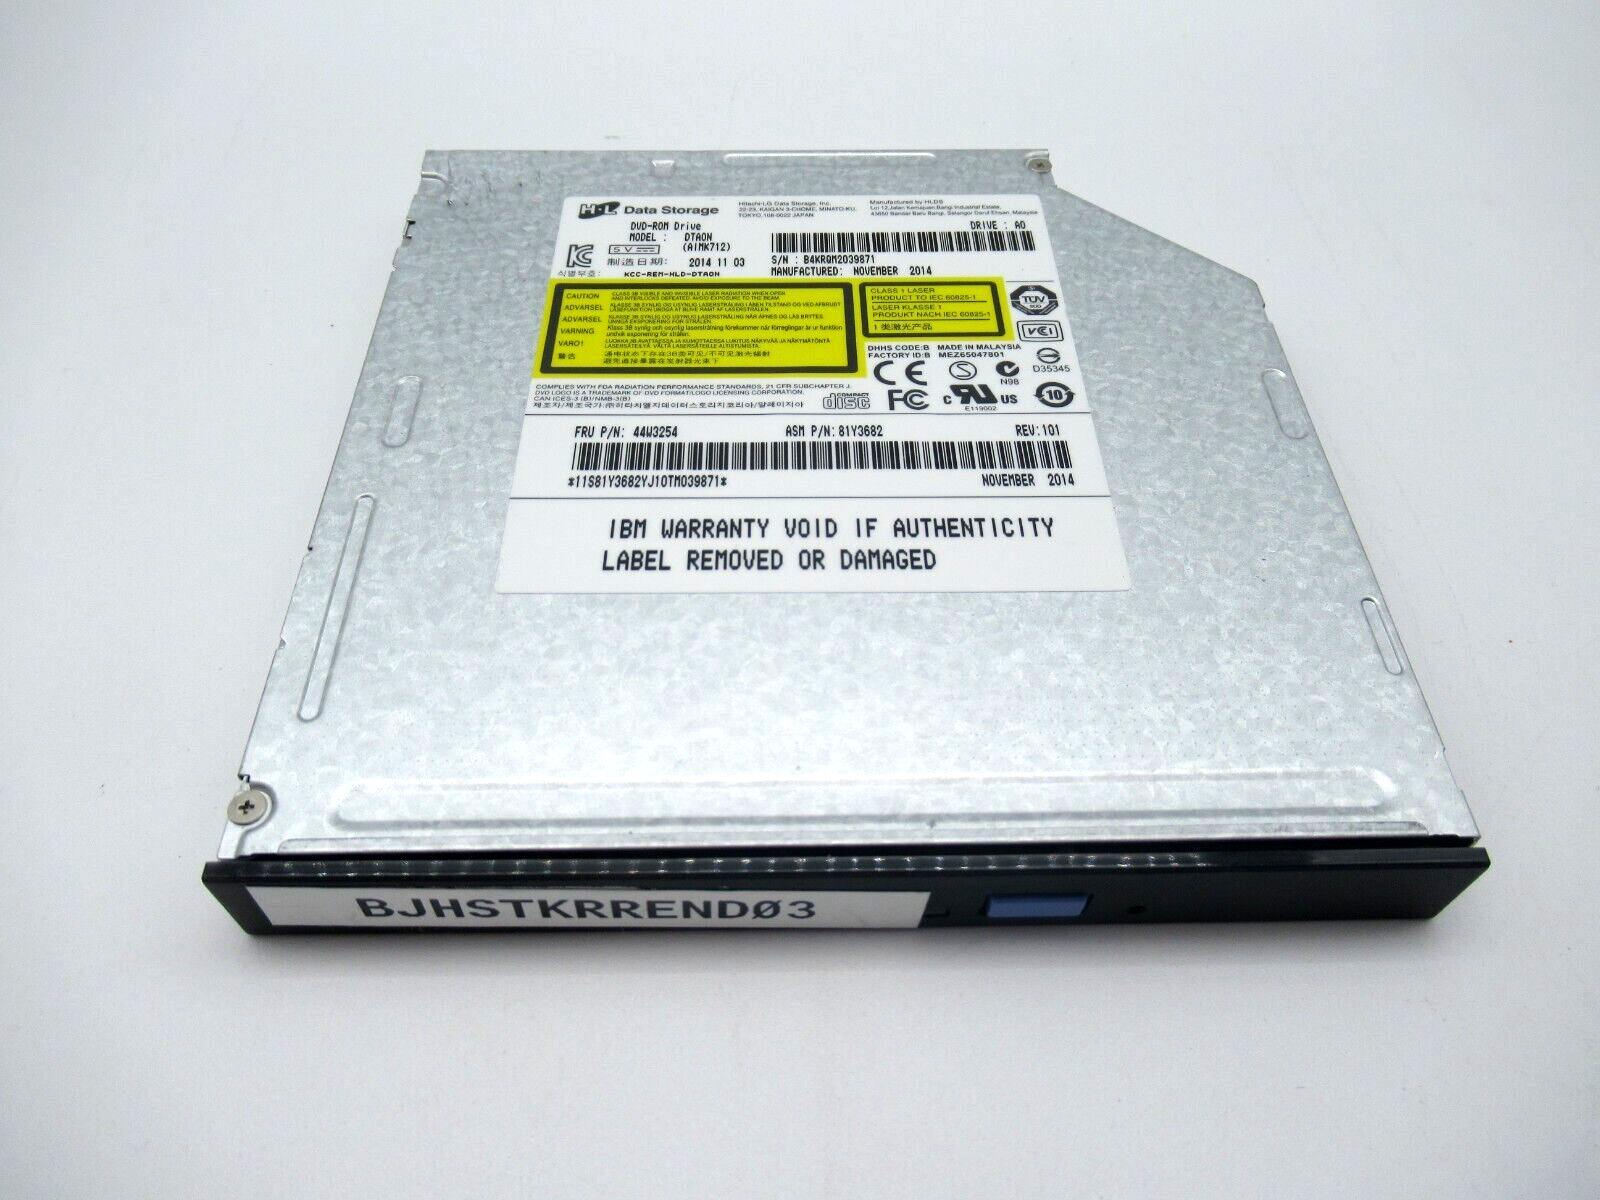 Dell HL Data Storage DVD-ROM Drive DTAON DVD Drive *NEW*